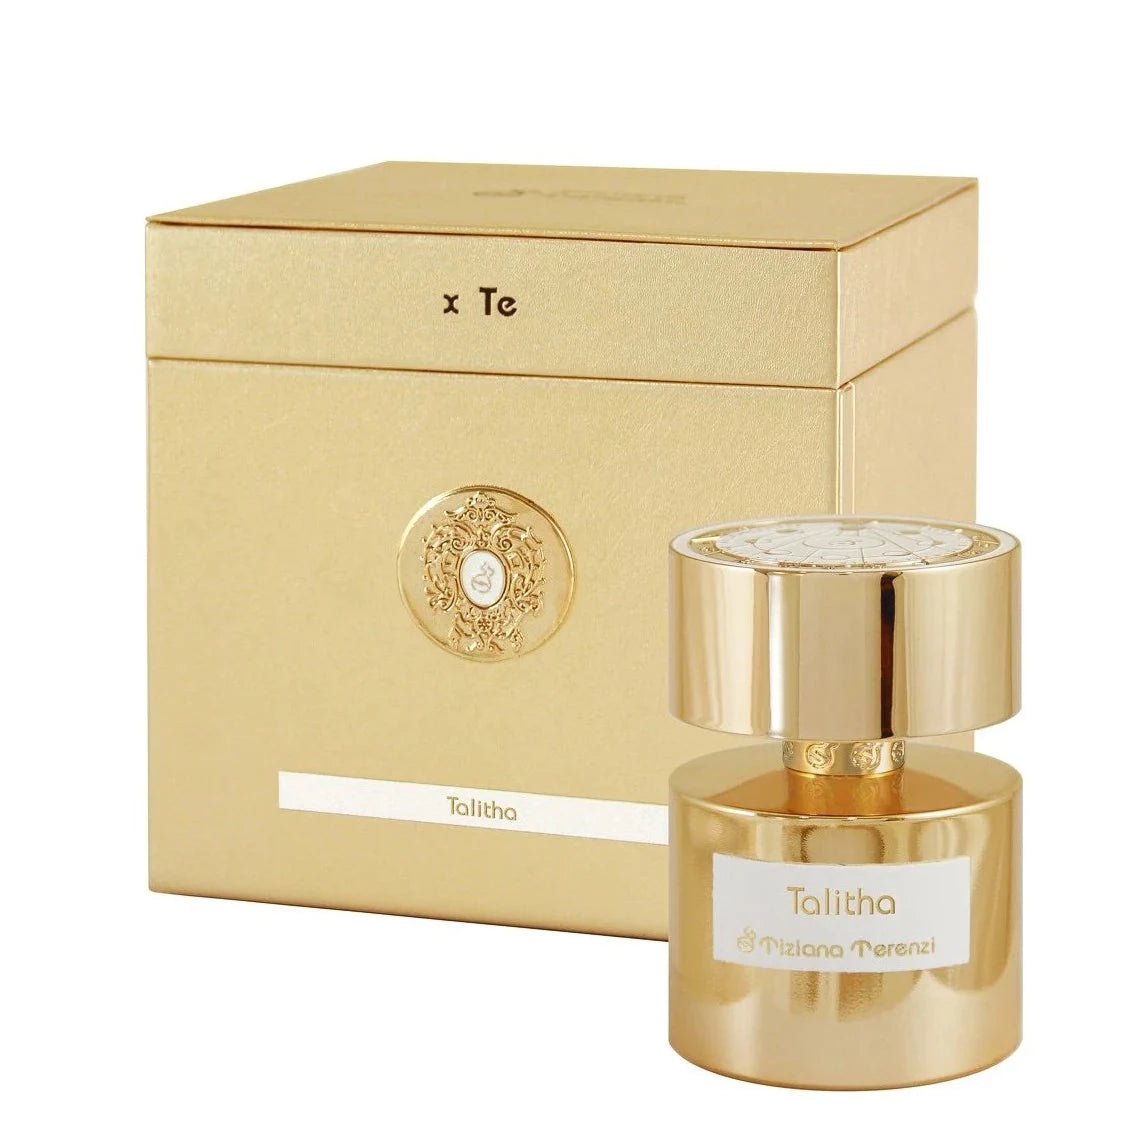 Tiziana Terenzi Luna Star Collection Talitha Extrait De Parfum | My Perfume Shop Australia